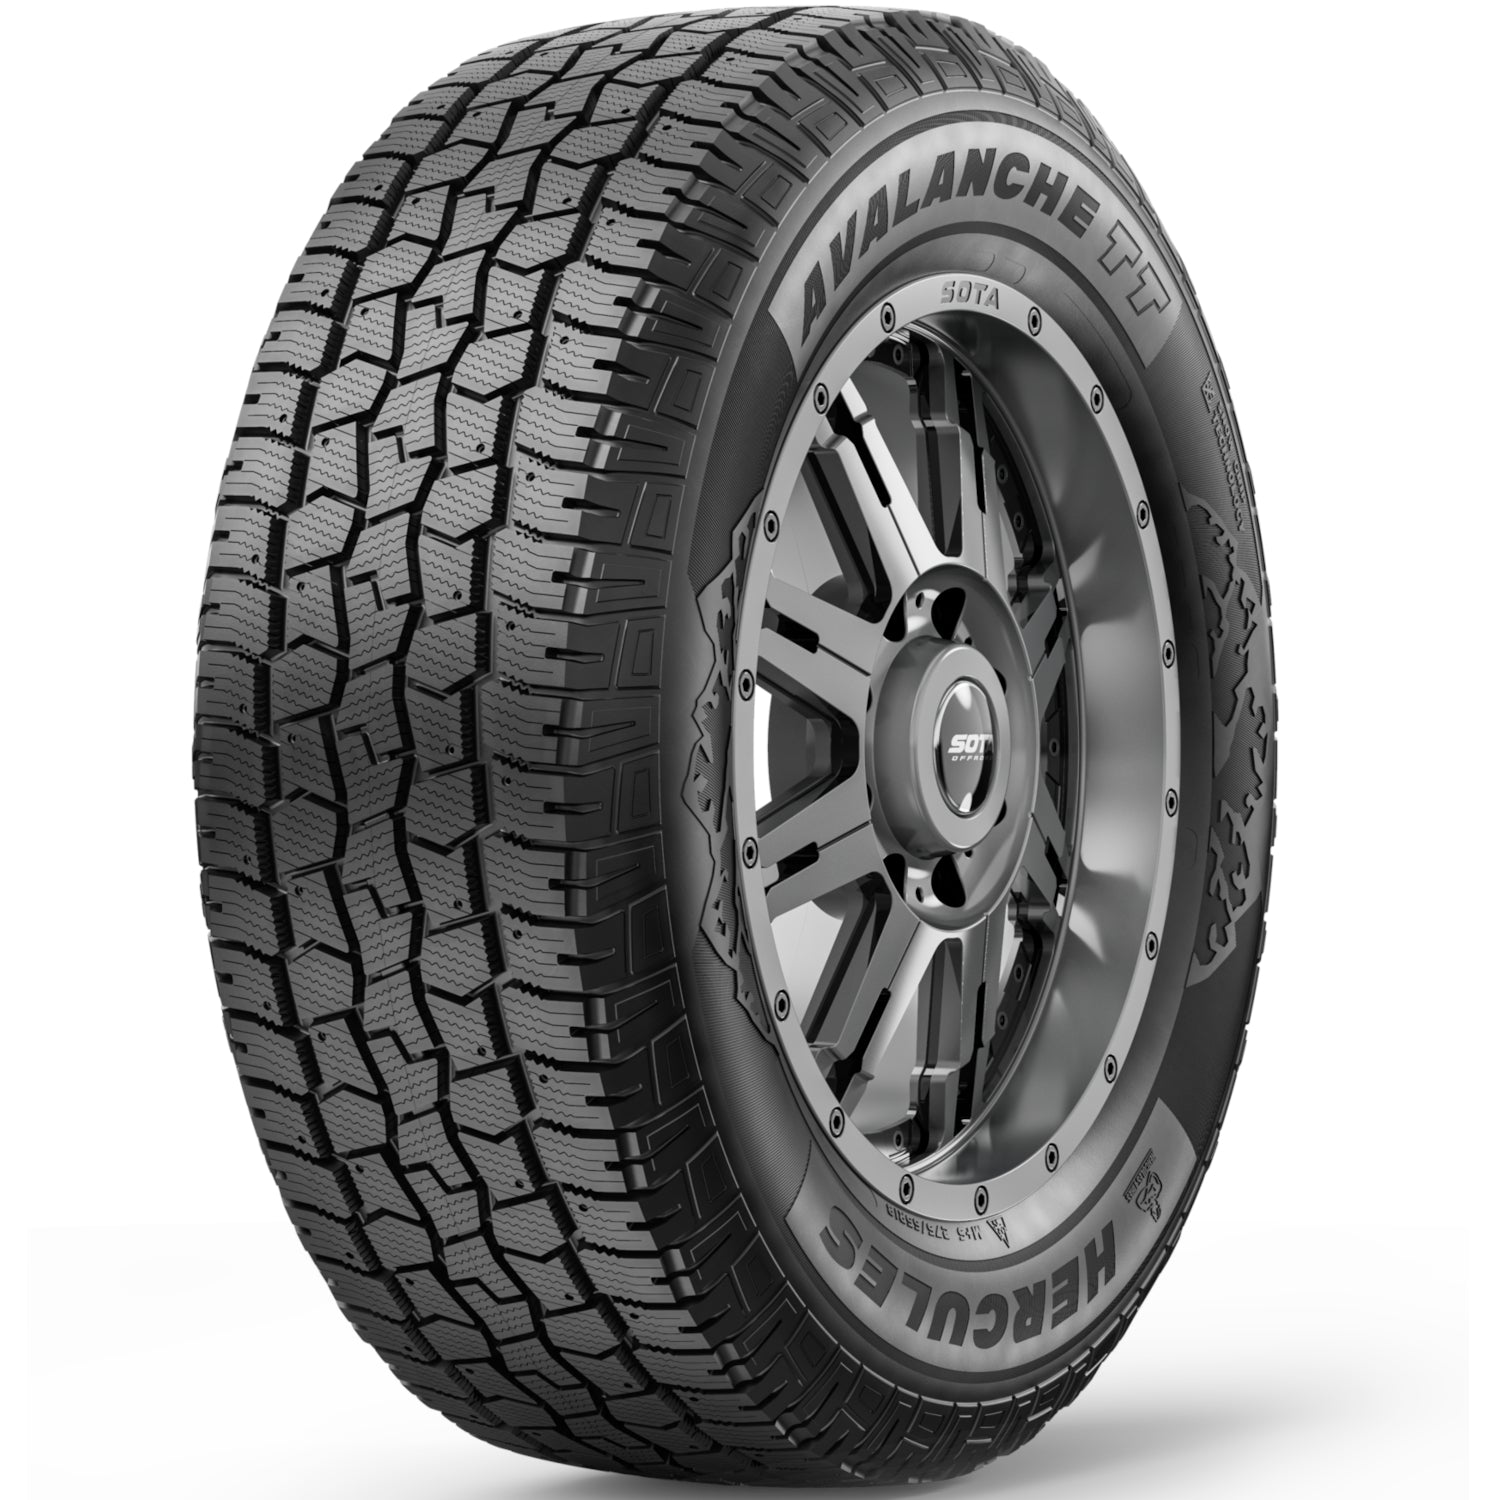 HERCULES AVALANCHE TT 275/60R20 (33.1X10.8R 20) Tires